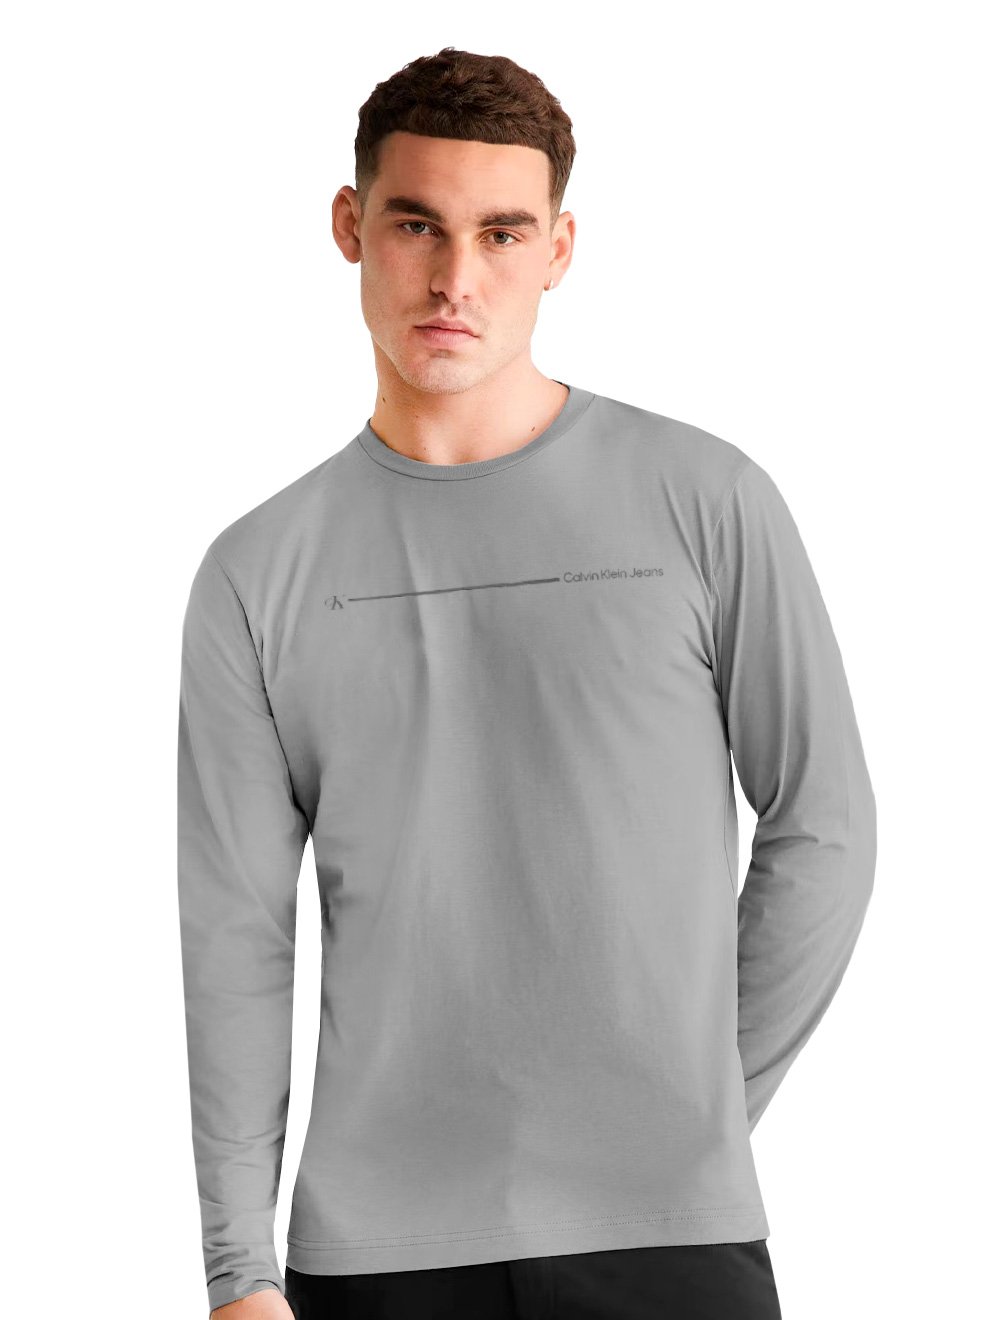 Camiseta Masculina Reissue Tinto Sujo - Calvin Klein Jeans - Cinza -  Shop2gether